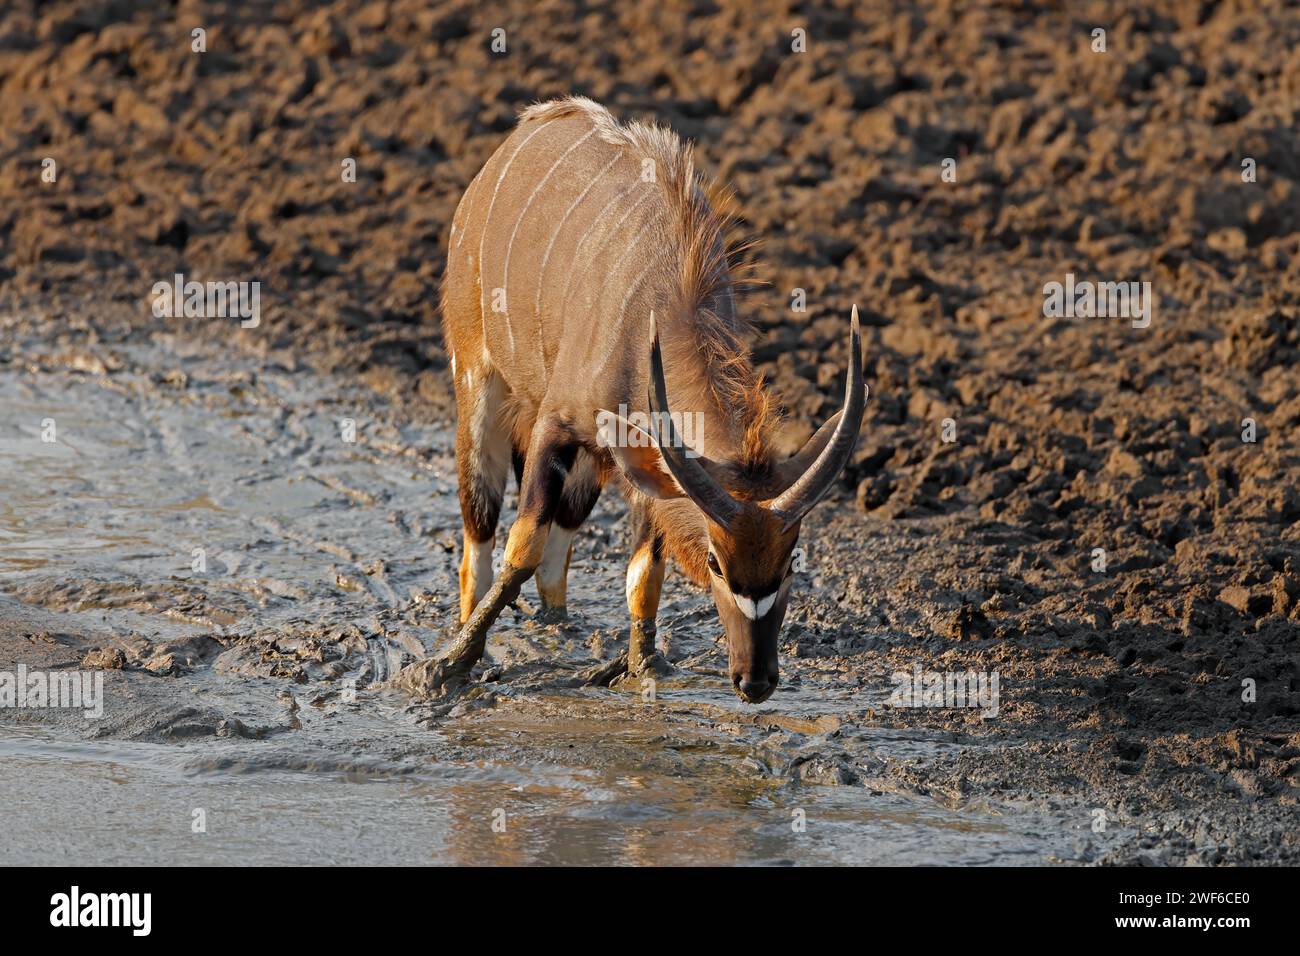 A male Nyala antelope (Tragelaphus angasii) drinking water, Kruger National Park, South Africa Stock Photo